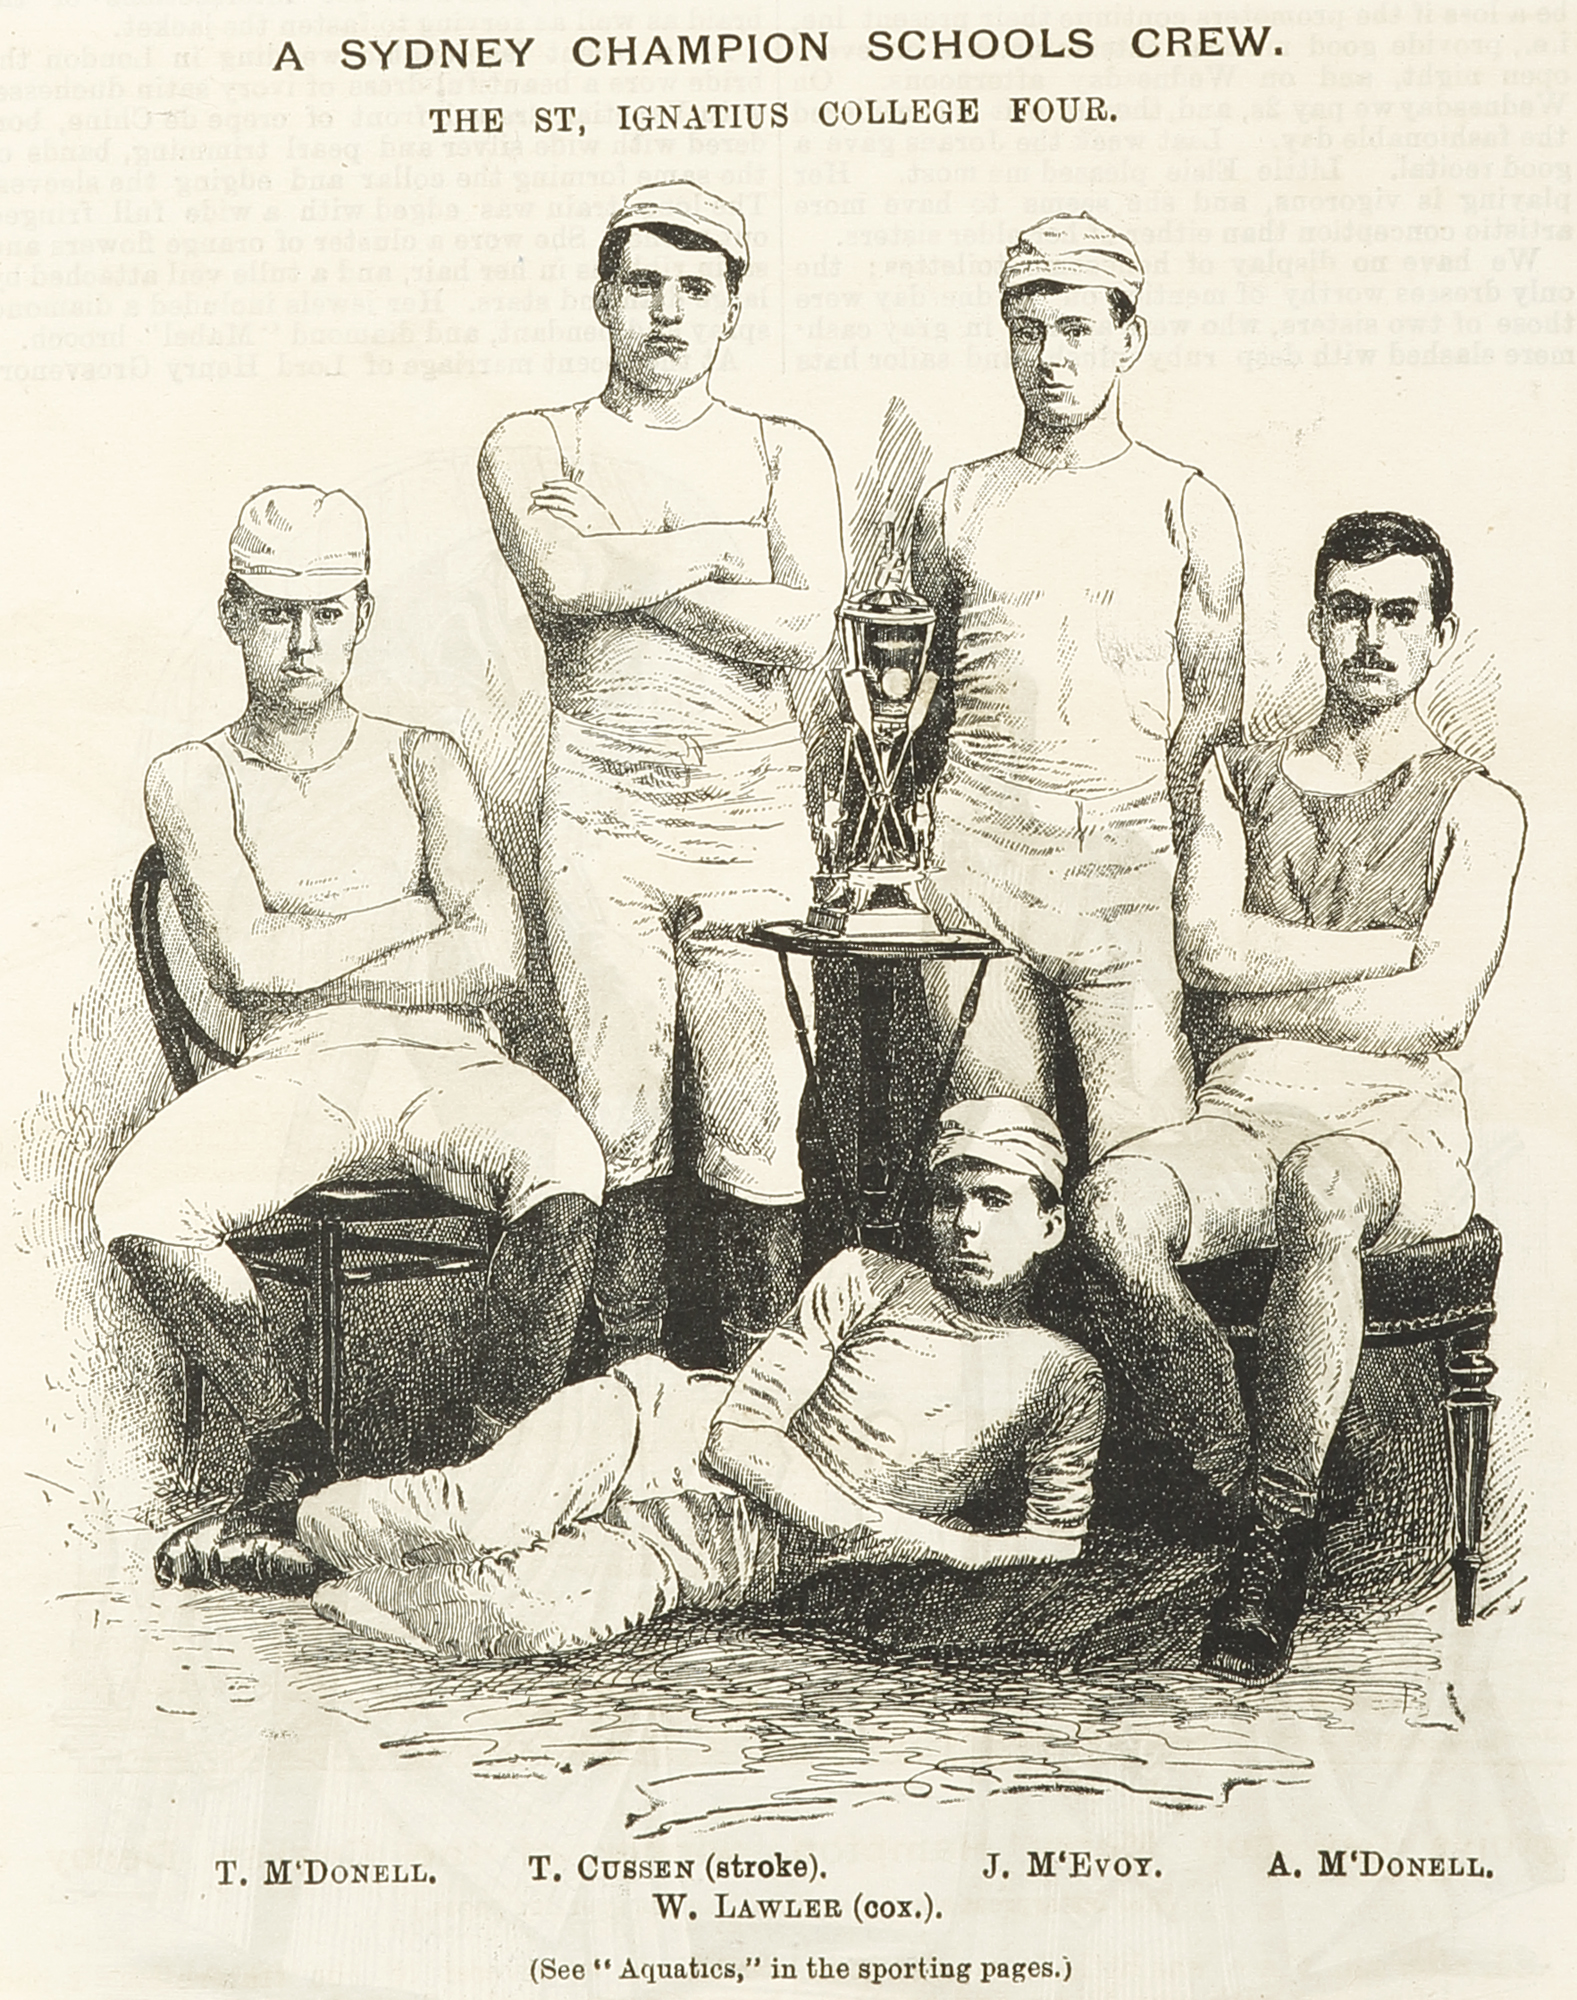 A Sydney Champion Schools Crew. The St. Ignatius College Four. - Antique Print from 1887